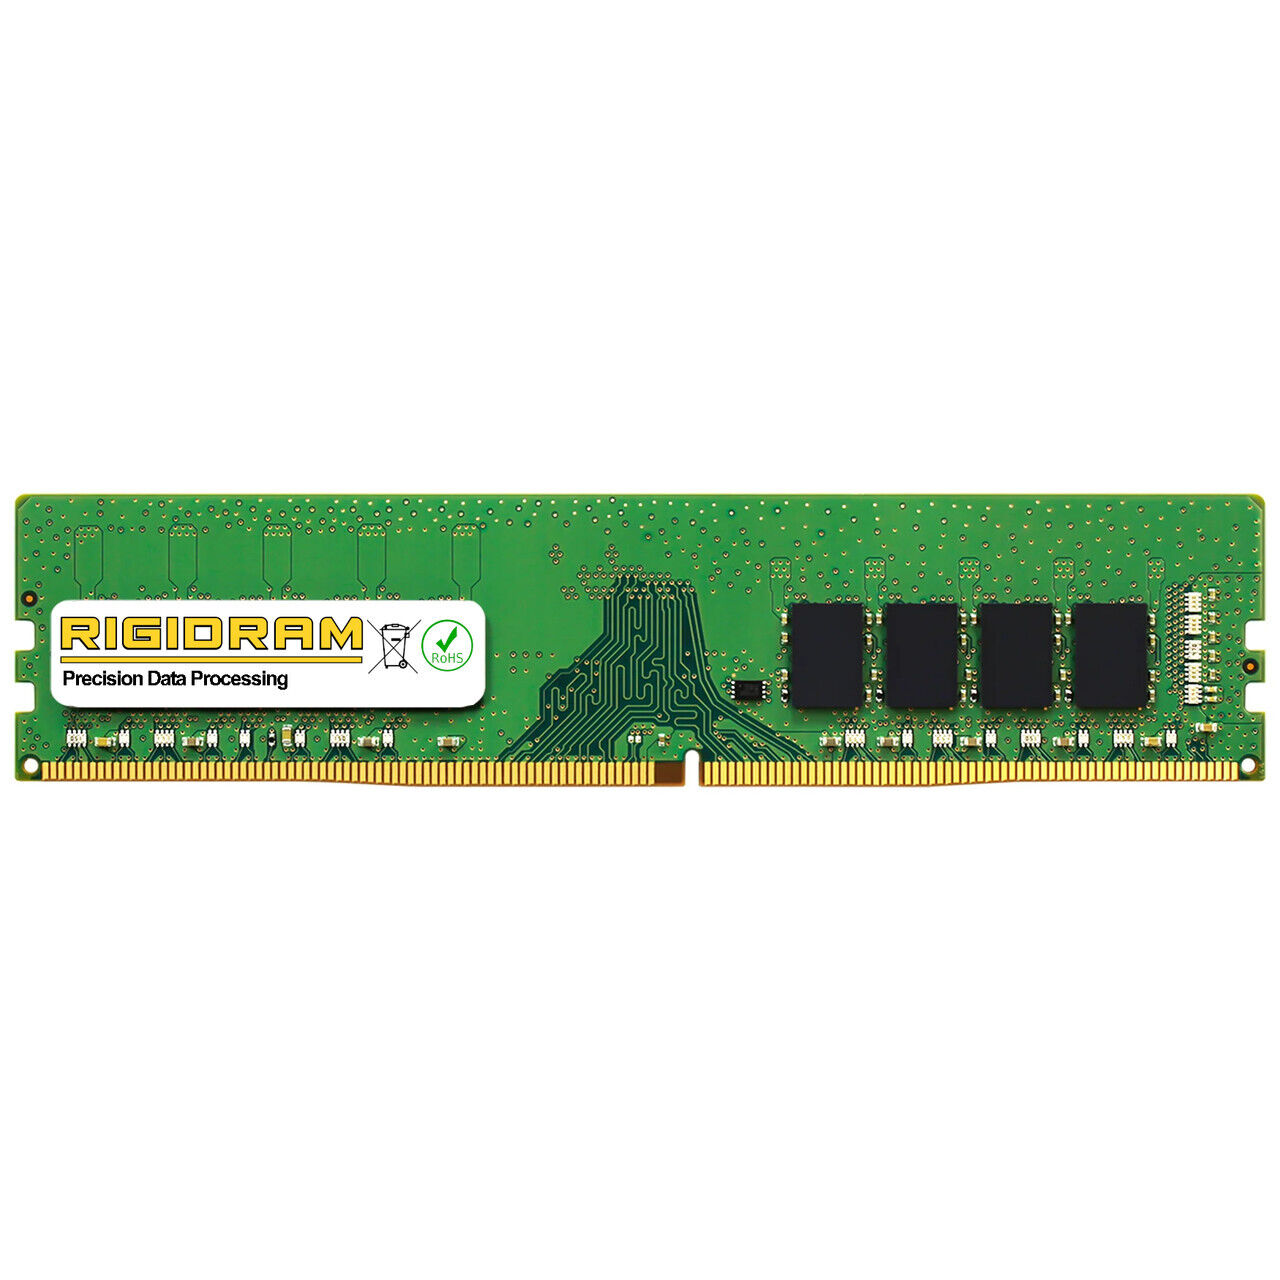 16GB RAM HP EliteDesk 800 G5 DDR4 Memory RigidRAM Upgrades